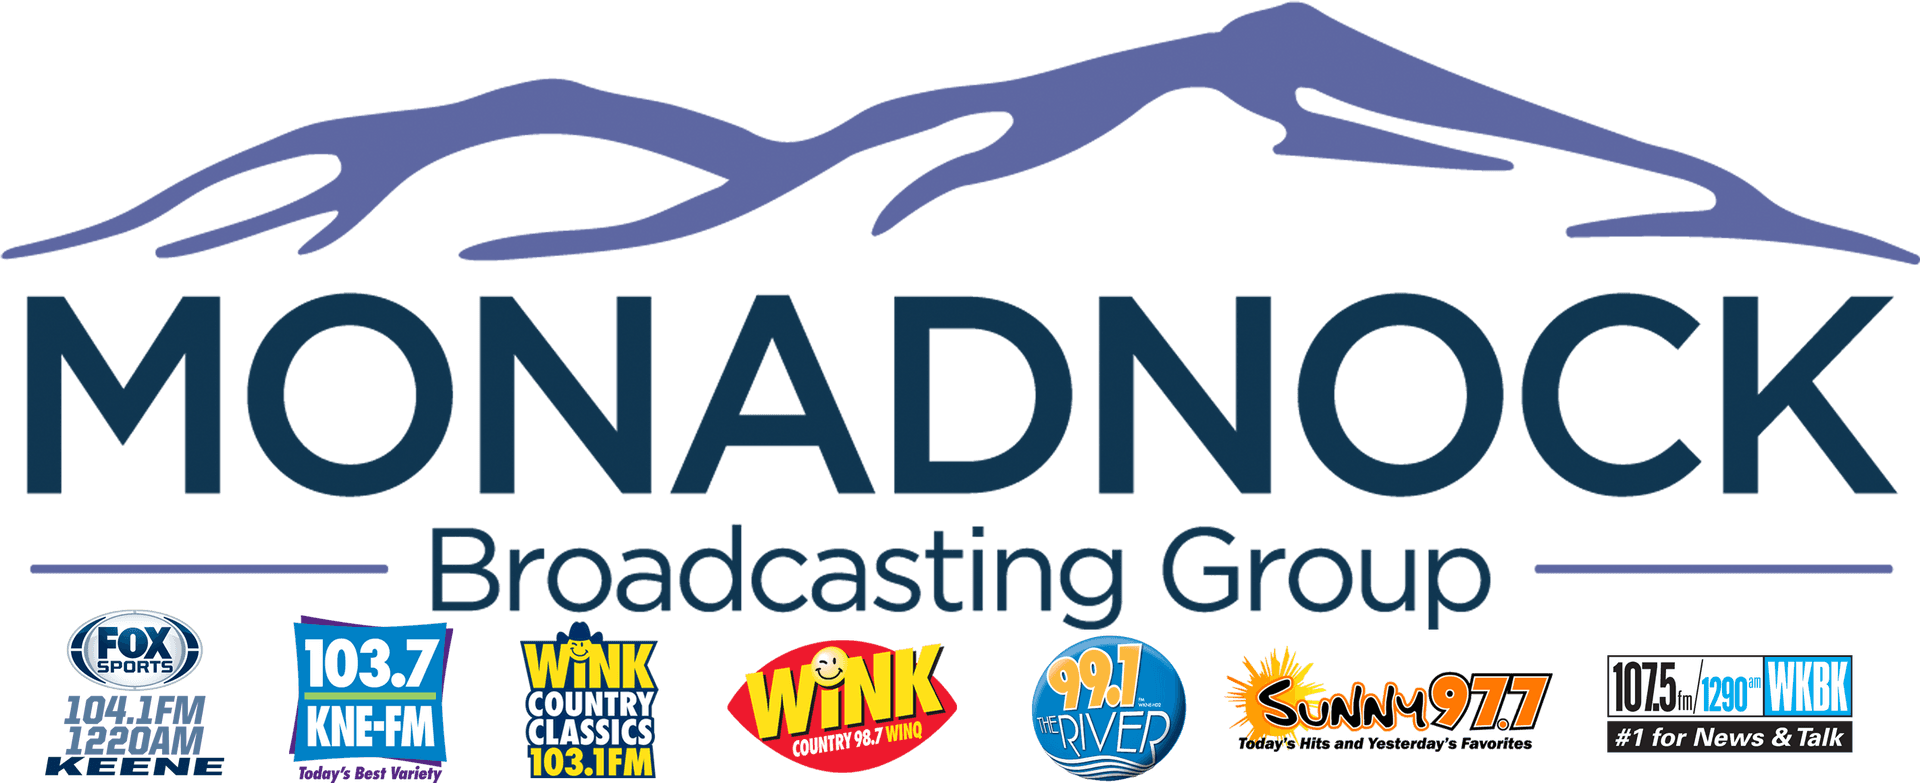 Monadnock Broadcasting Group Logo PNG image